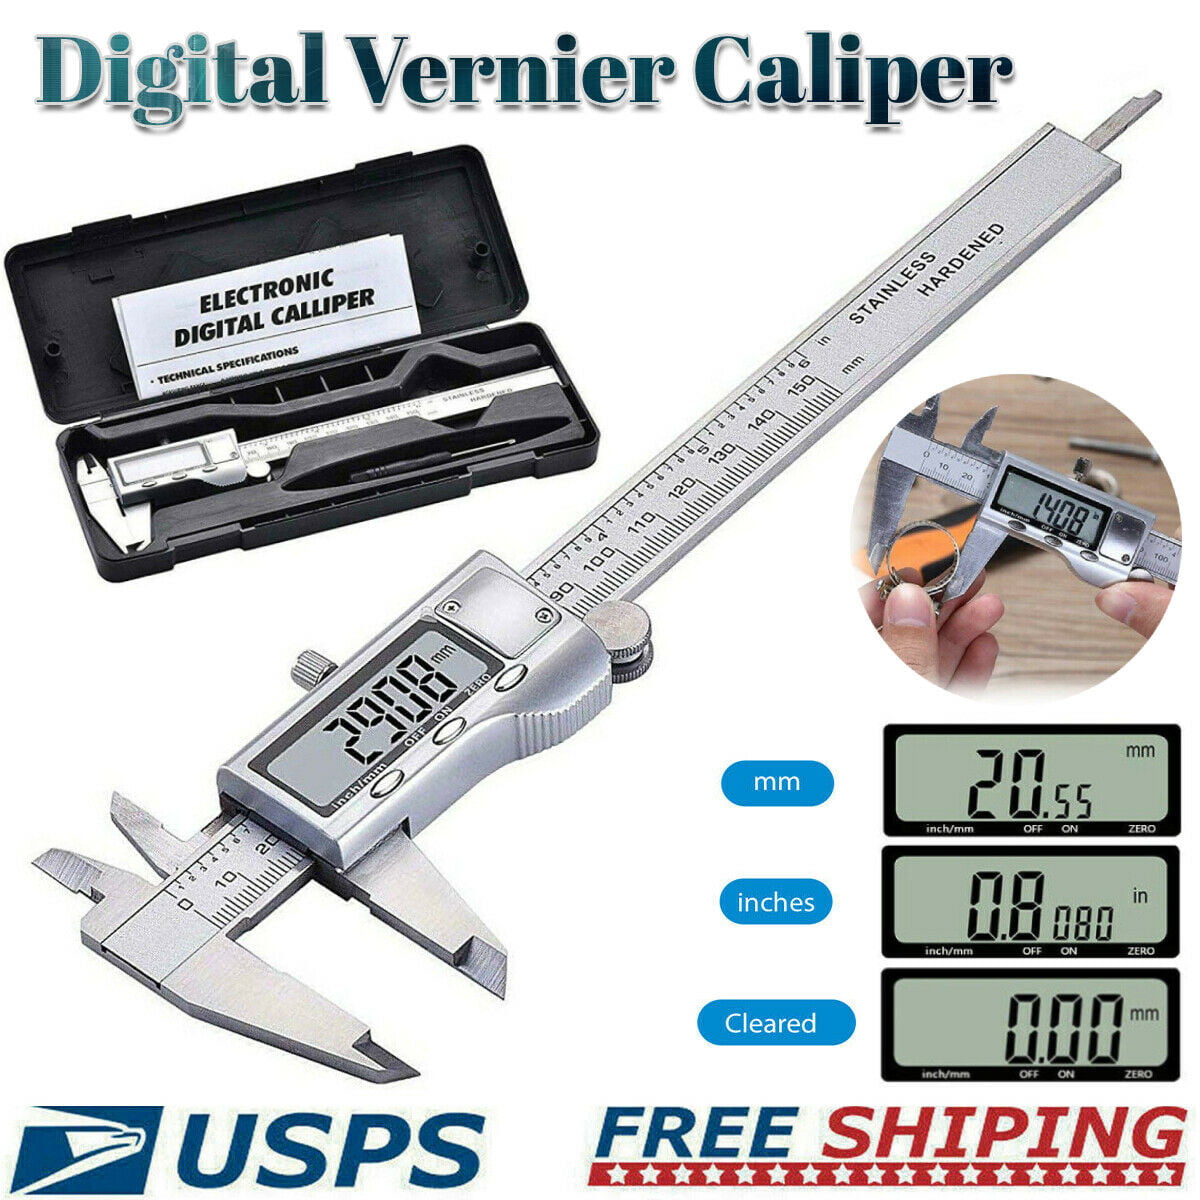 Details about   Digital Stainless Steel Caliper Vernier Micrometer Electronic Ruler Gauge Meter 